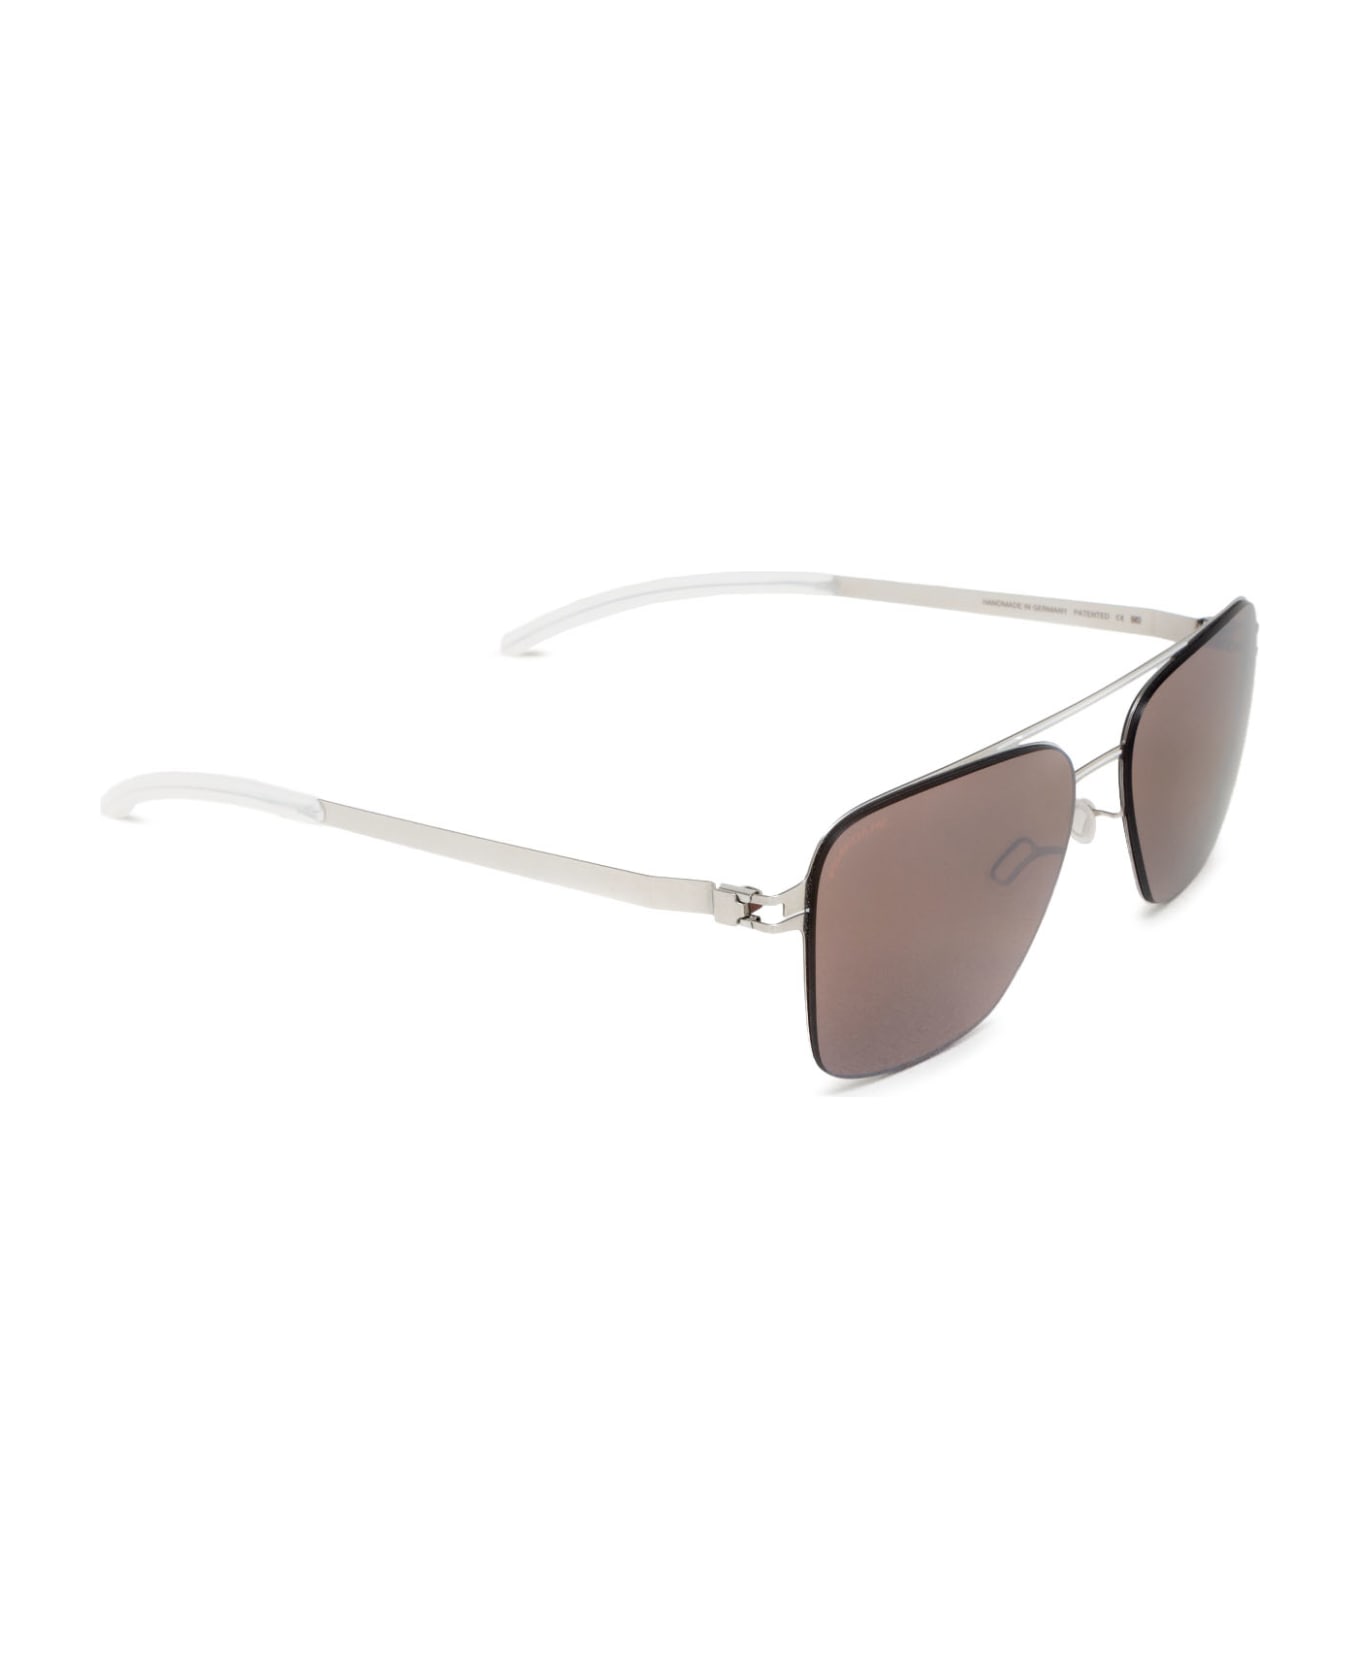 Mykita Bernie Sun Silver/white Sunglasses - Silver/White サングラス